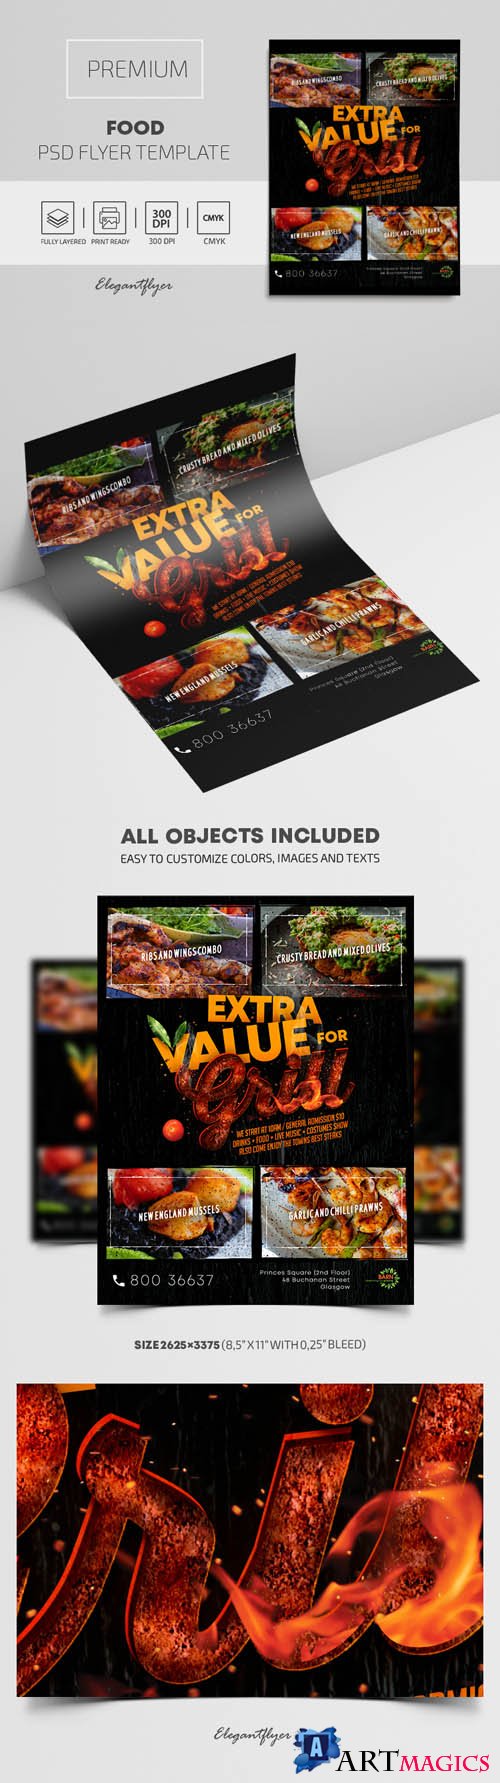 Food Premium PSD Flyer Template